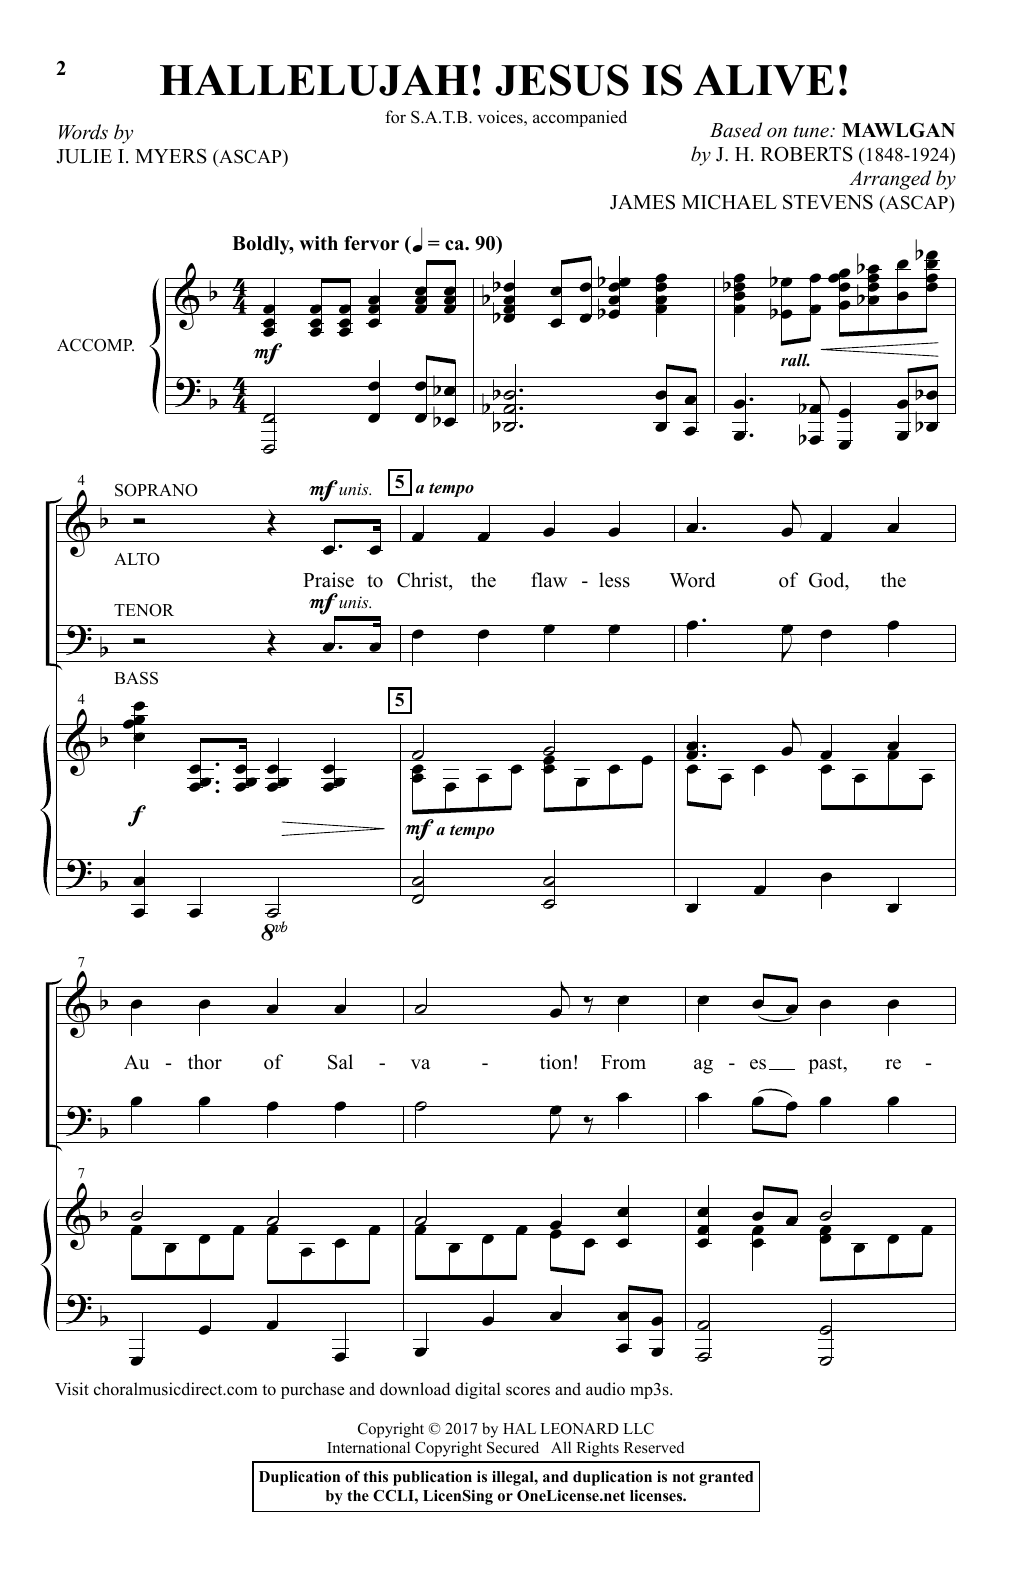 James Michael Stevens Hallelujah! Jesus Is Alive! Sheet Music Notes & Chords for SATB - Download or Print PDF